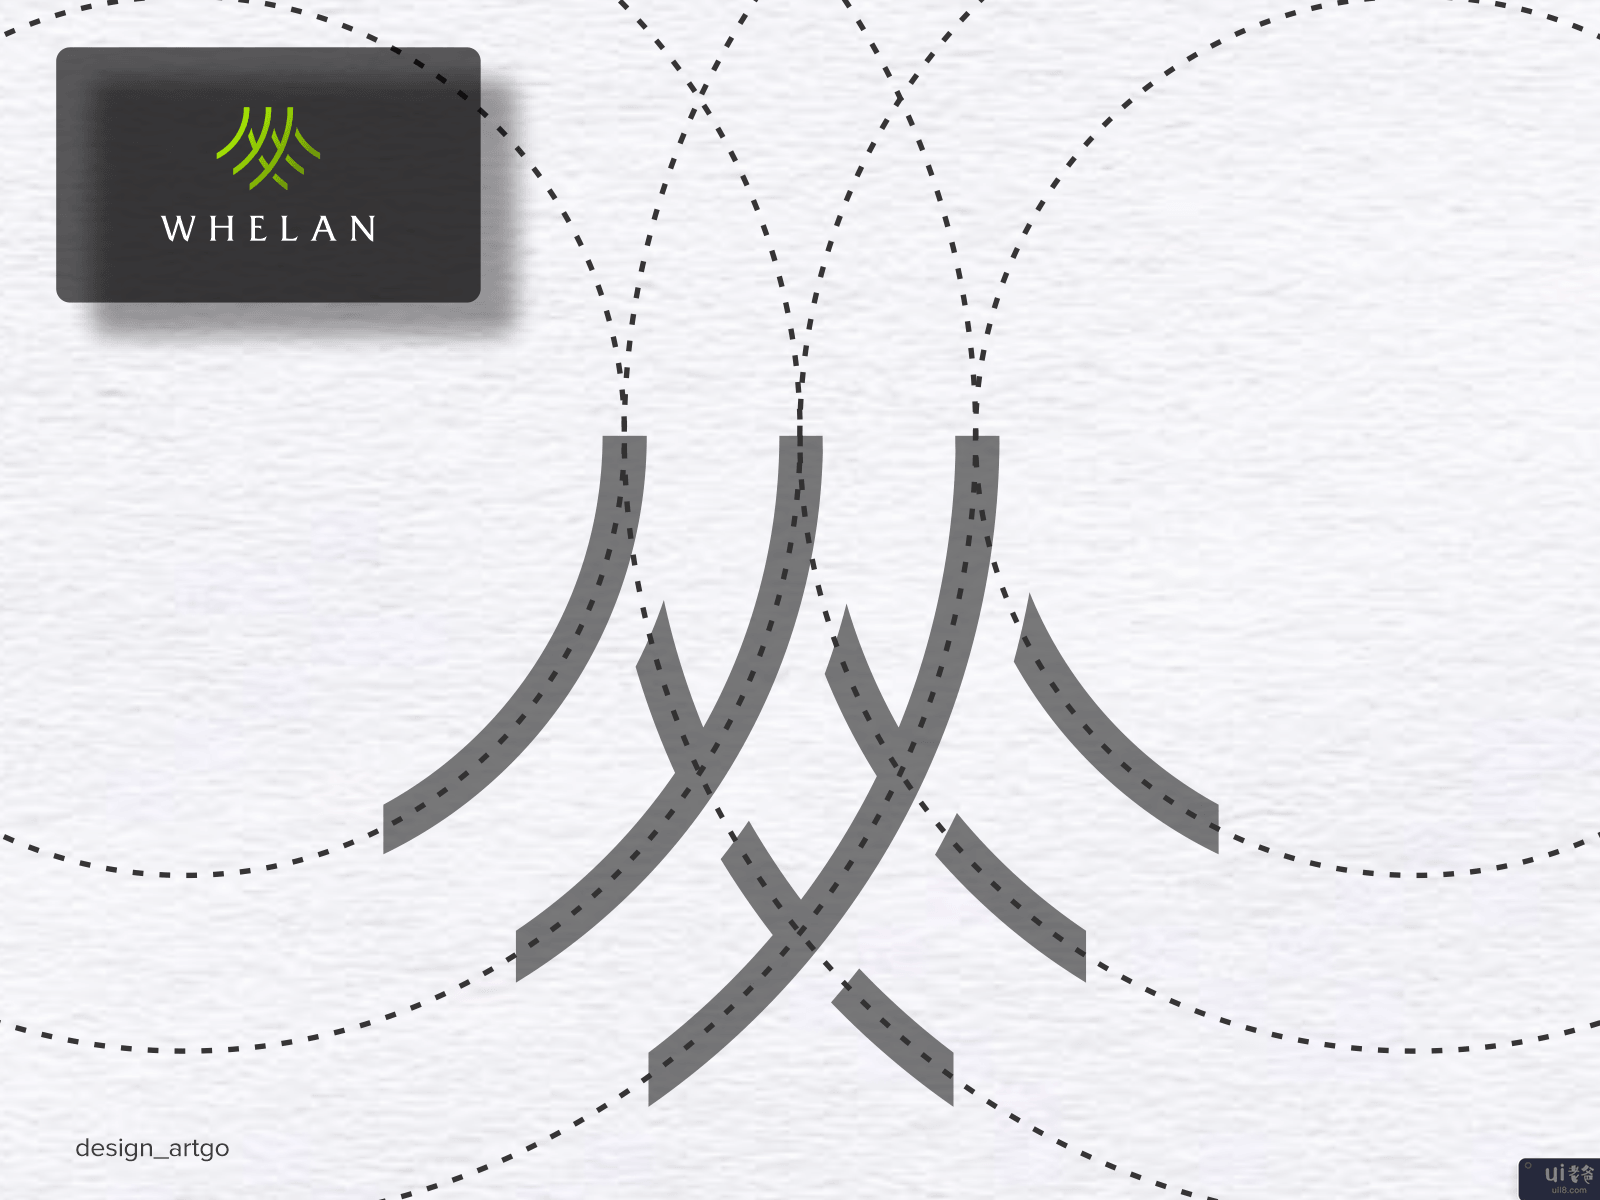 惠兰标志的网格(Whelan logo grid)插图